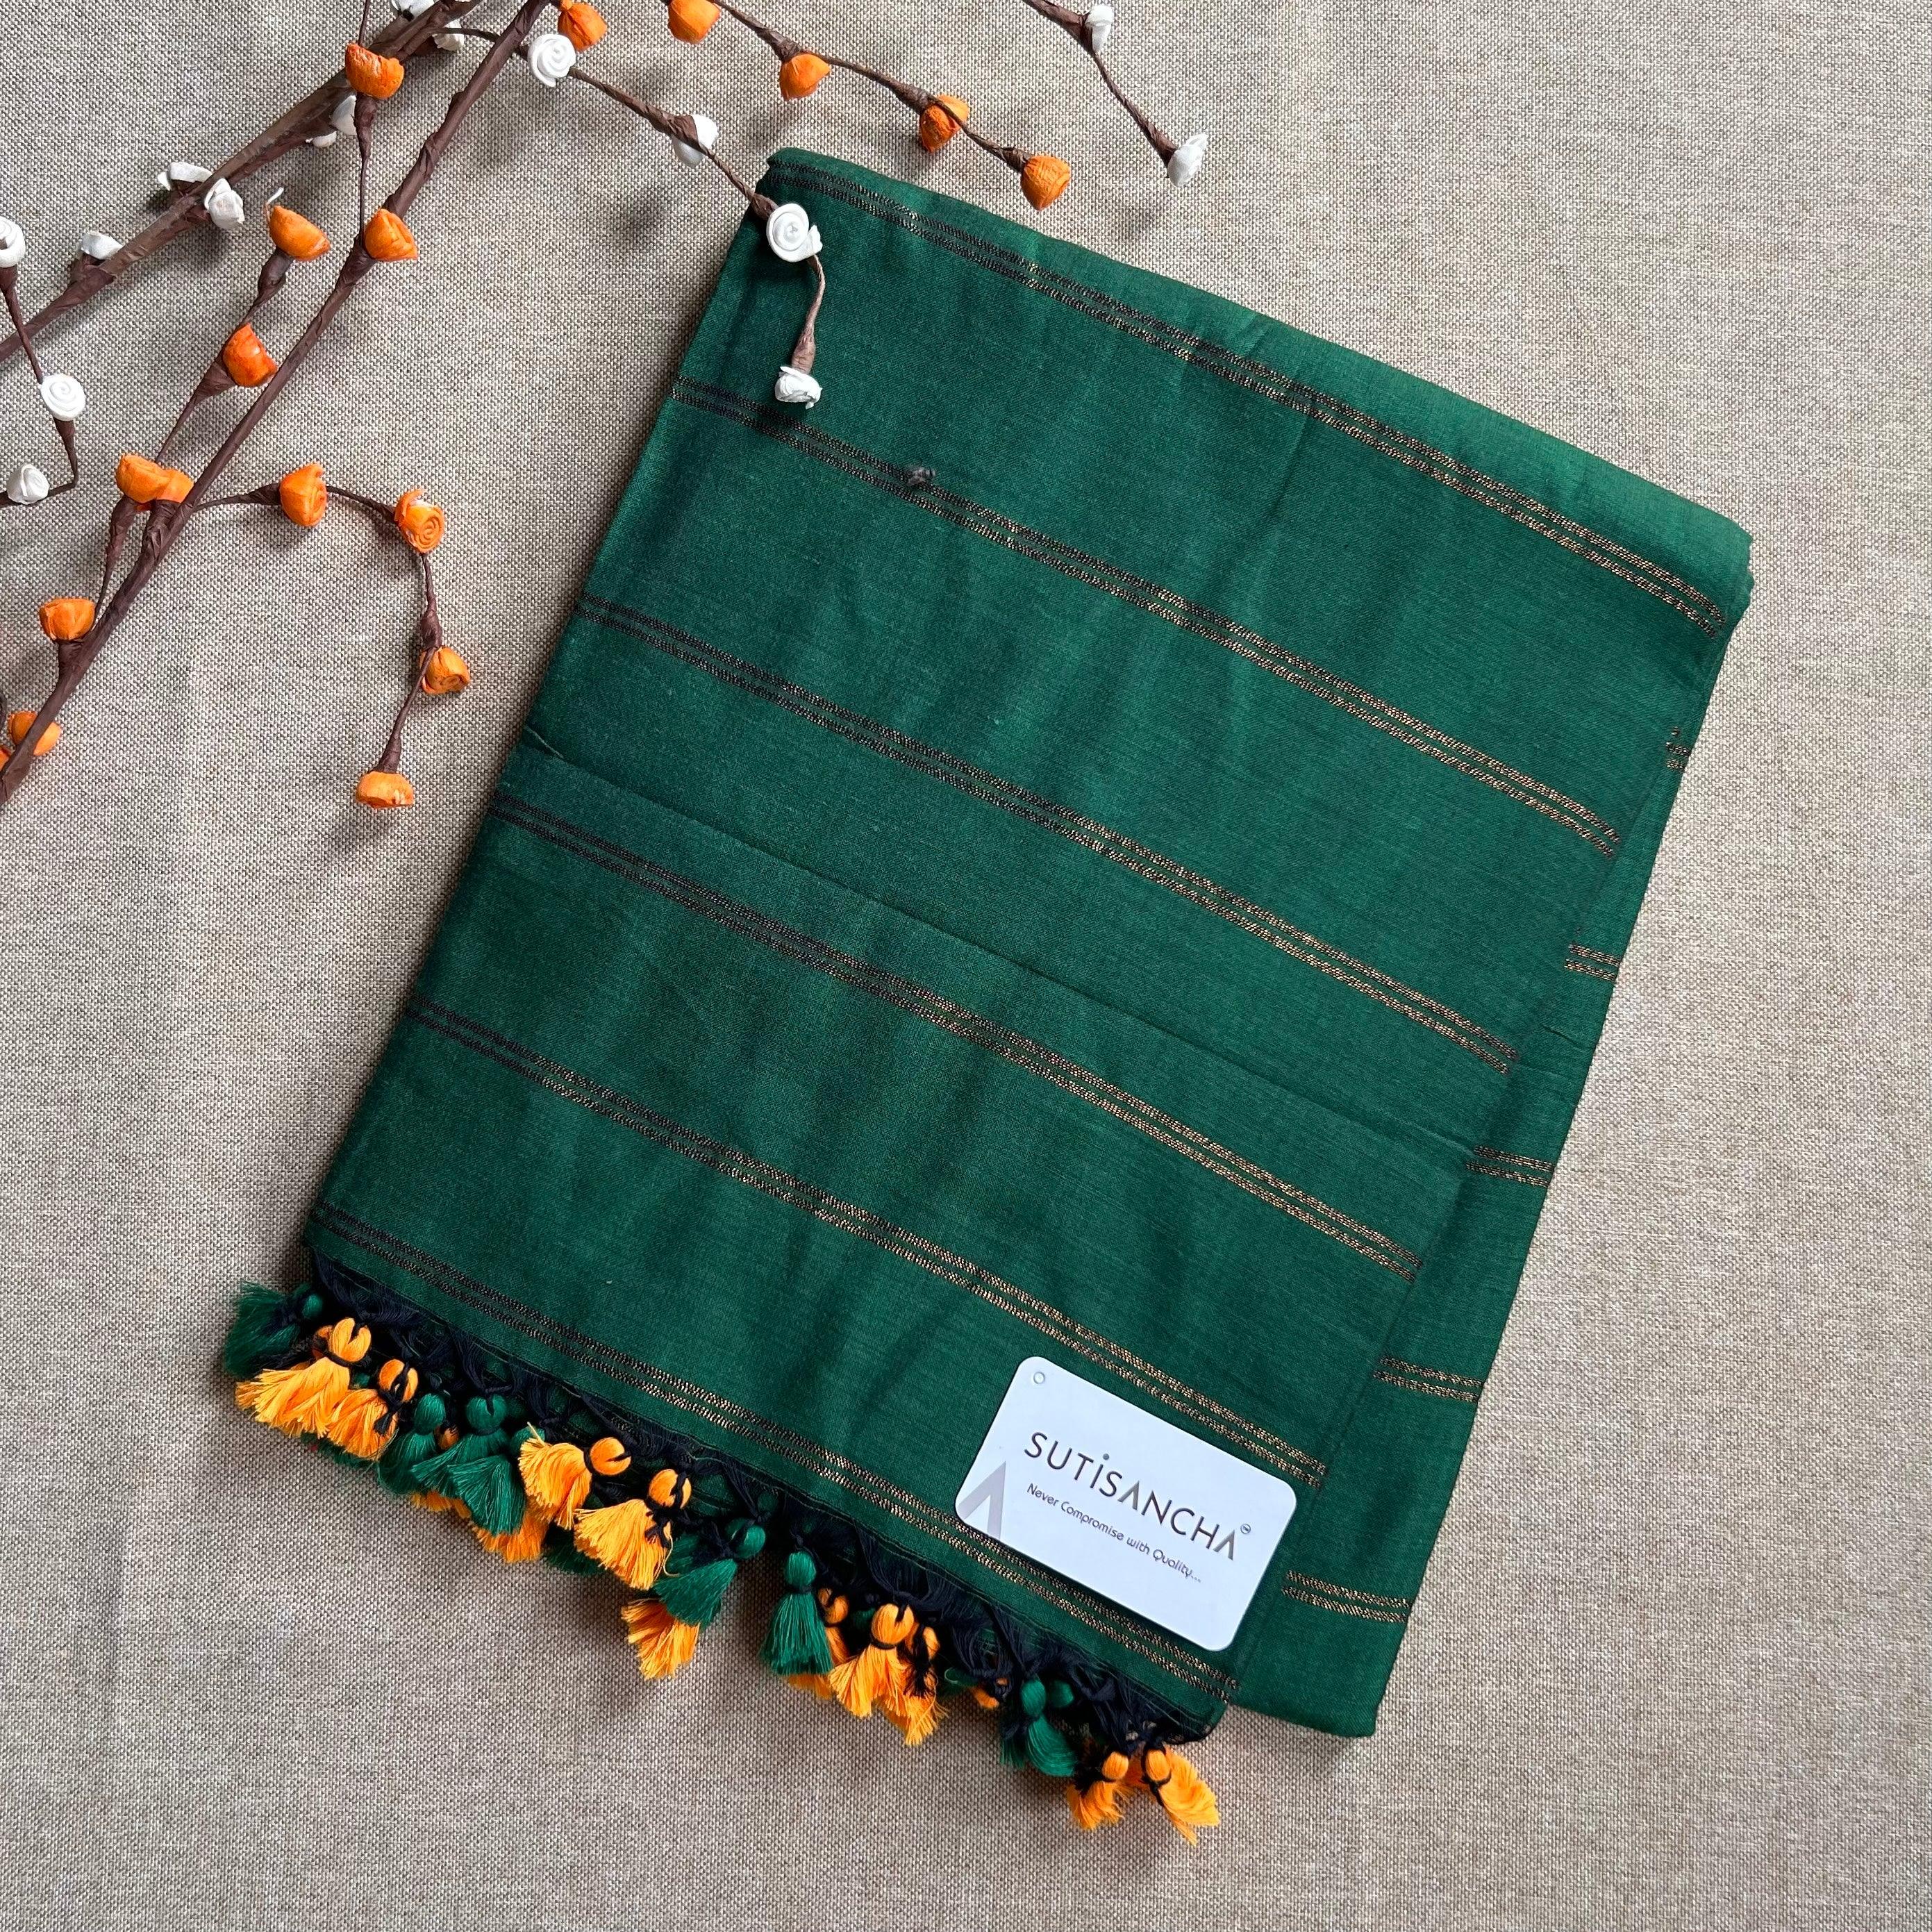 Sutisancha Green Dual Zari Stripe Saree - Suti Sancha